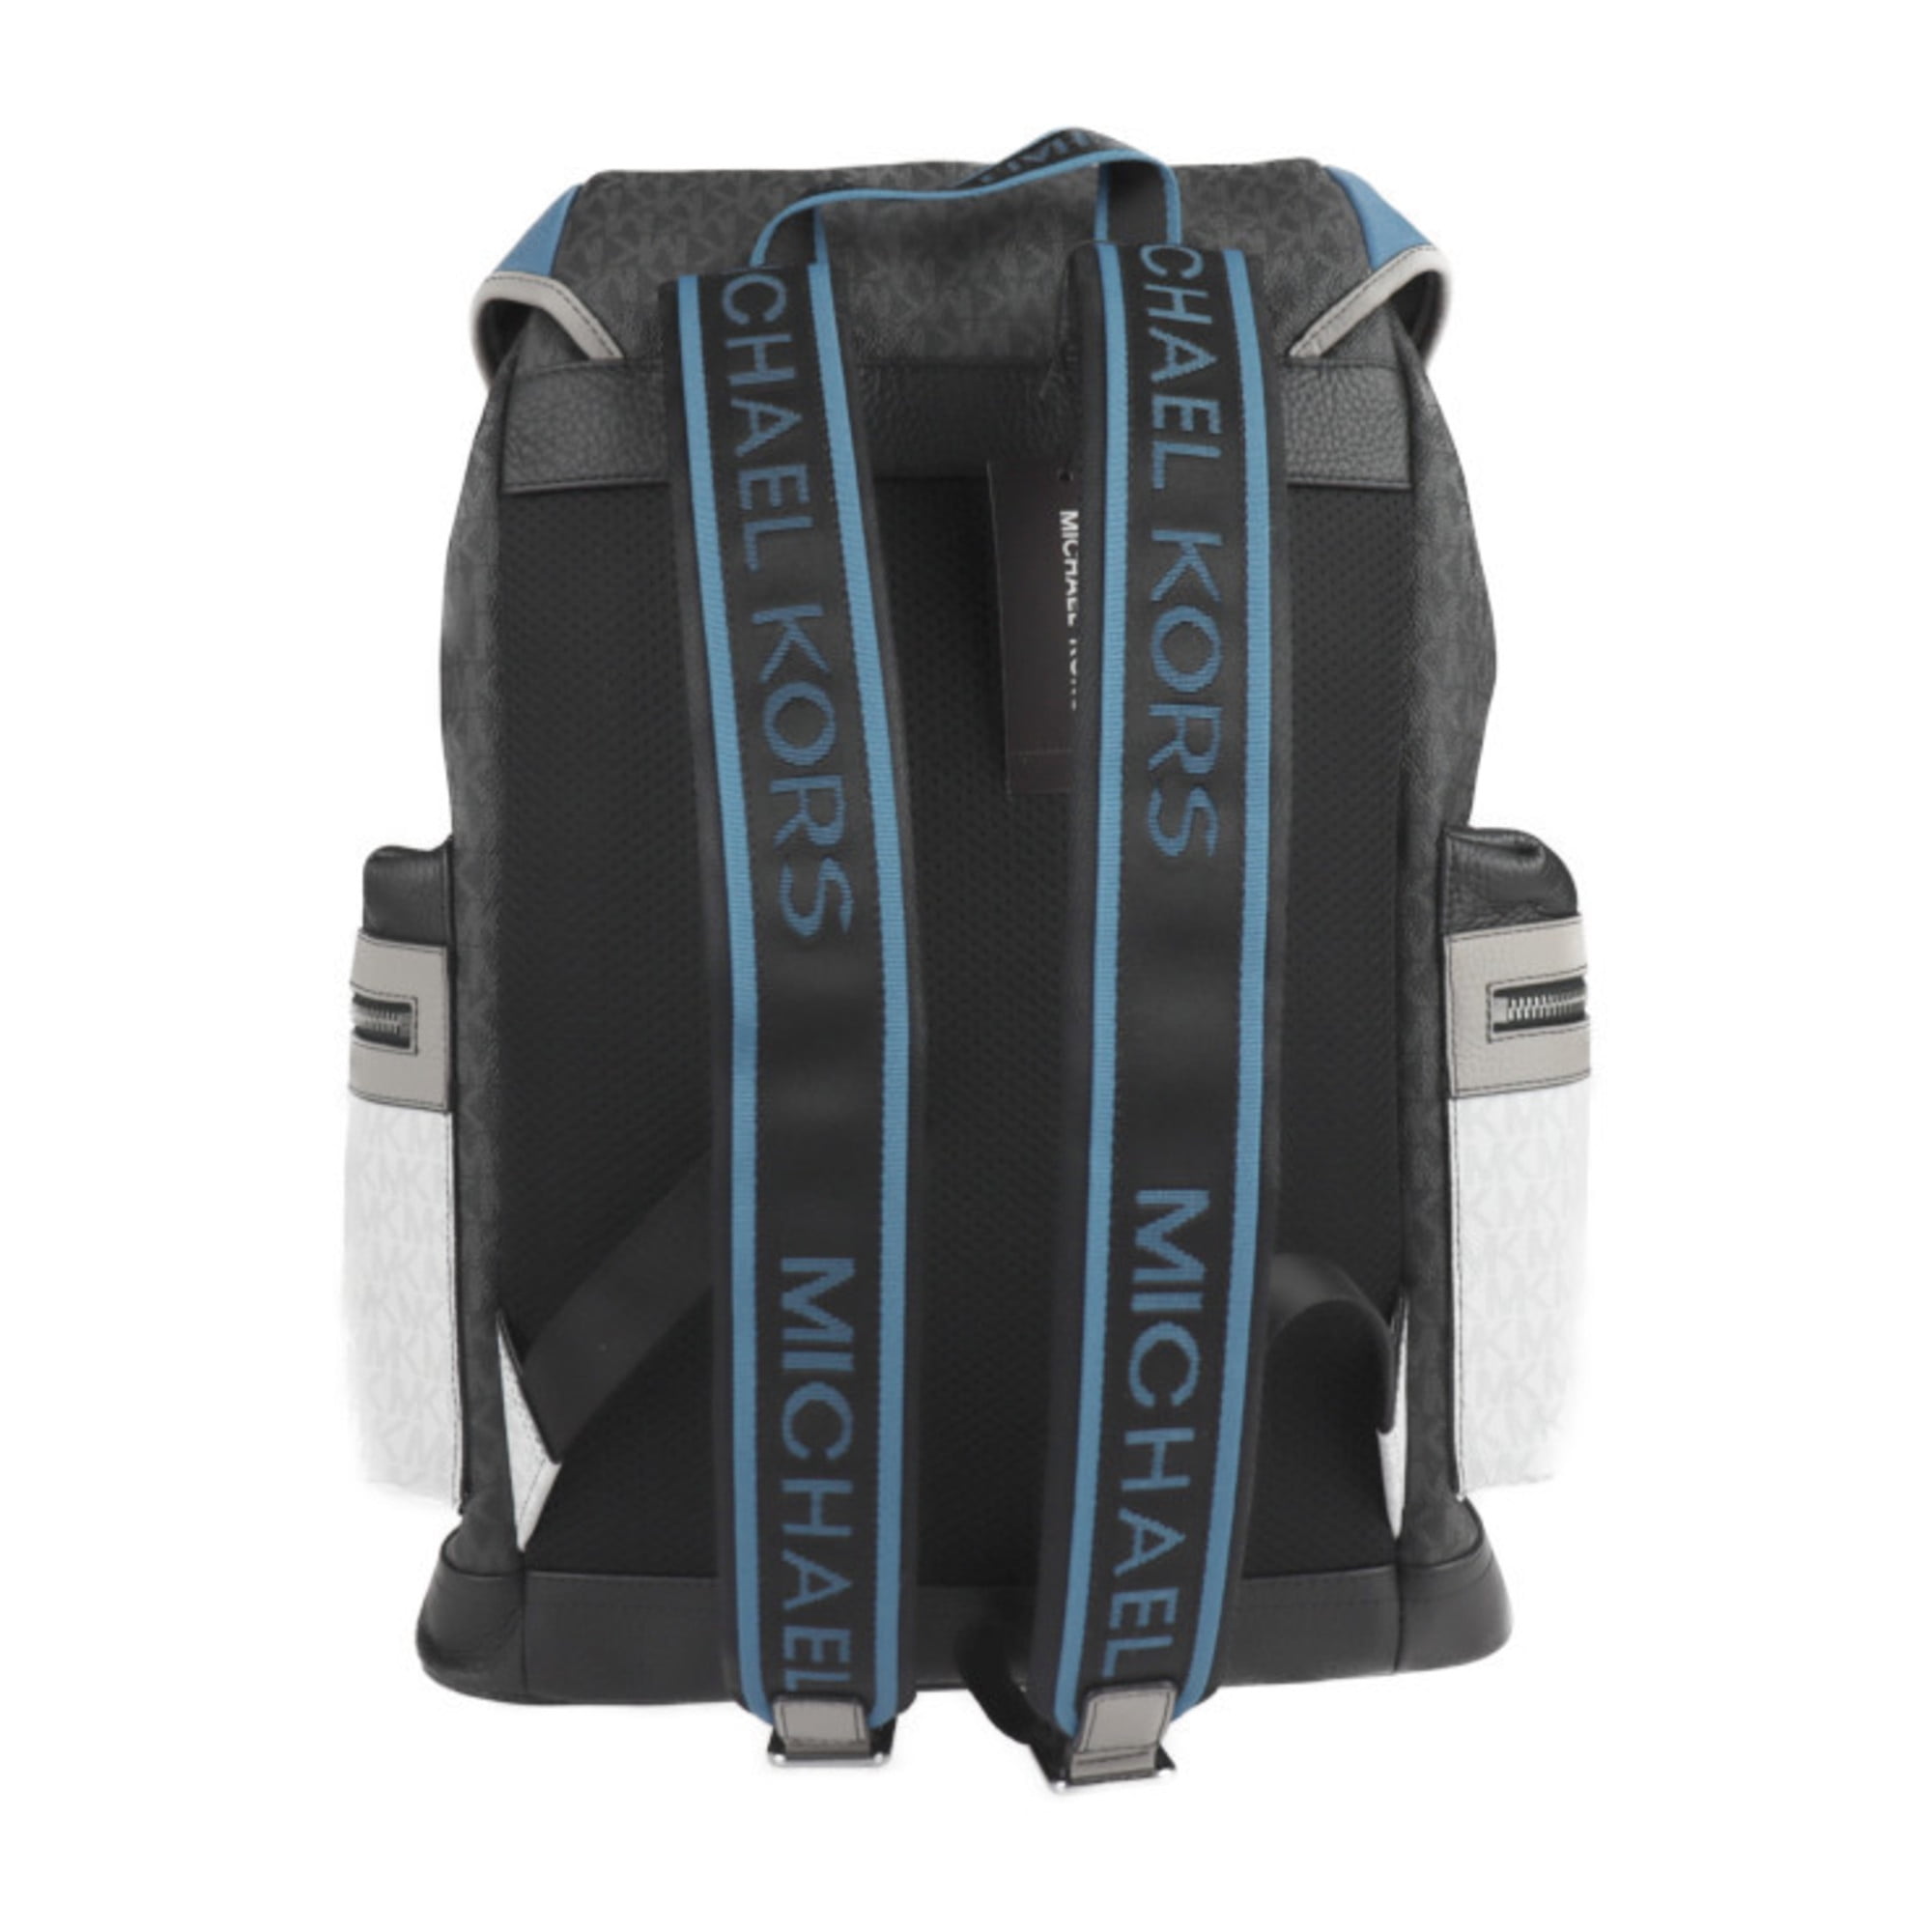 Michael Kors backpack Cooper signature 37U1LCOB6J black navy PVC